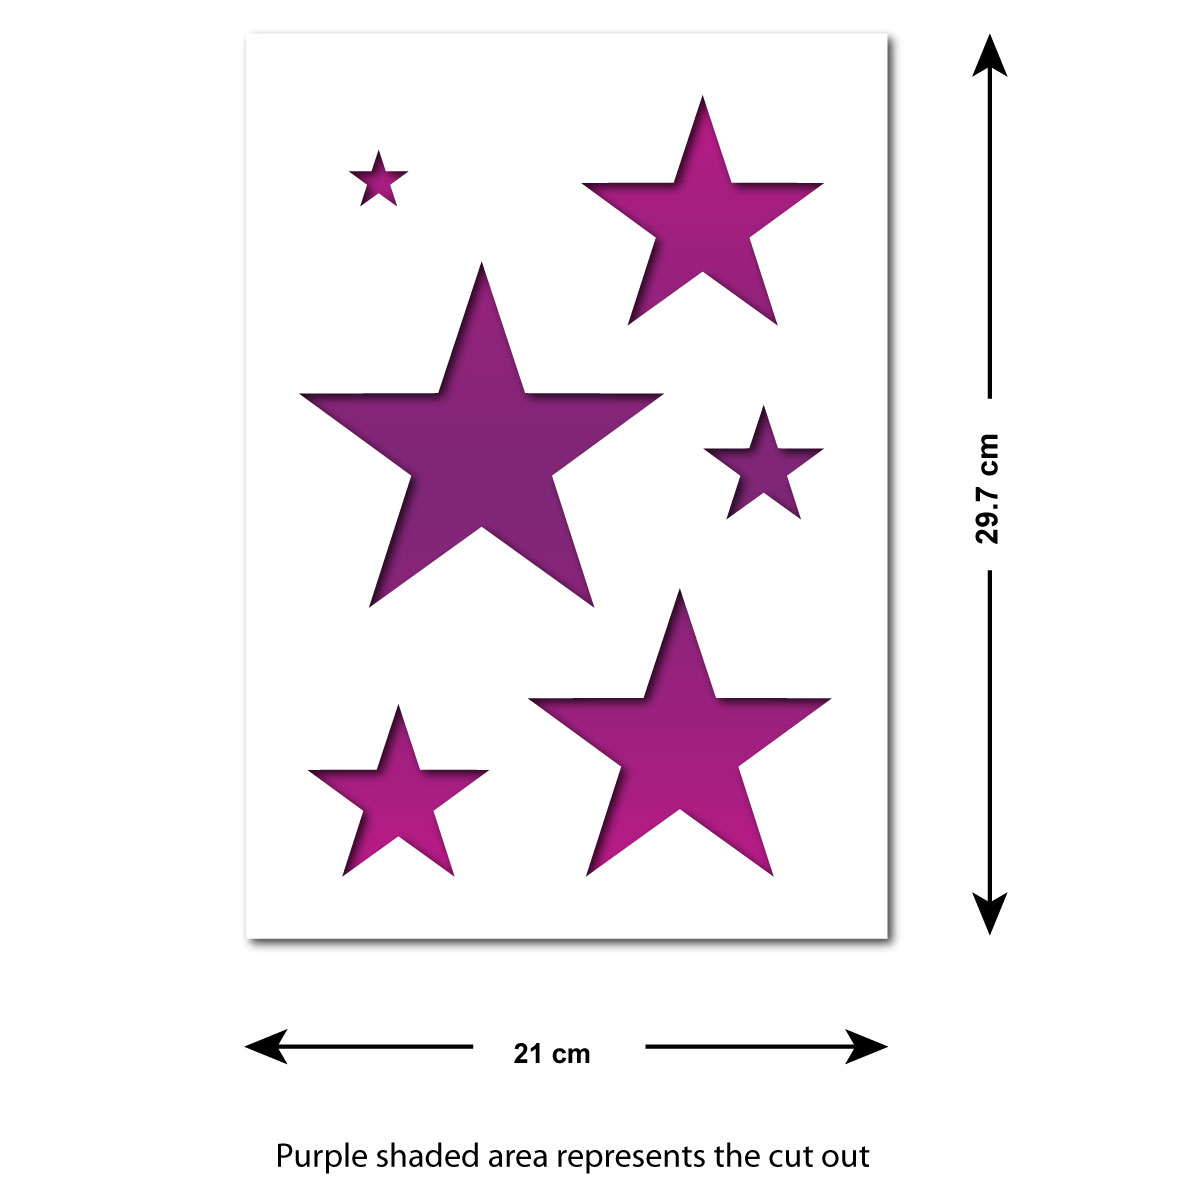 CraftStar A4 Stars Stencil Size Guide